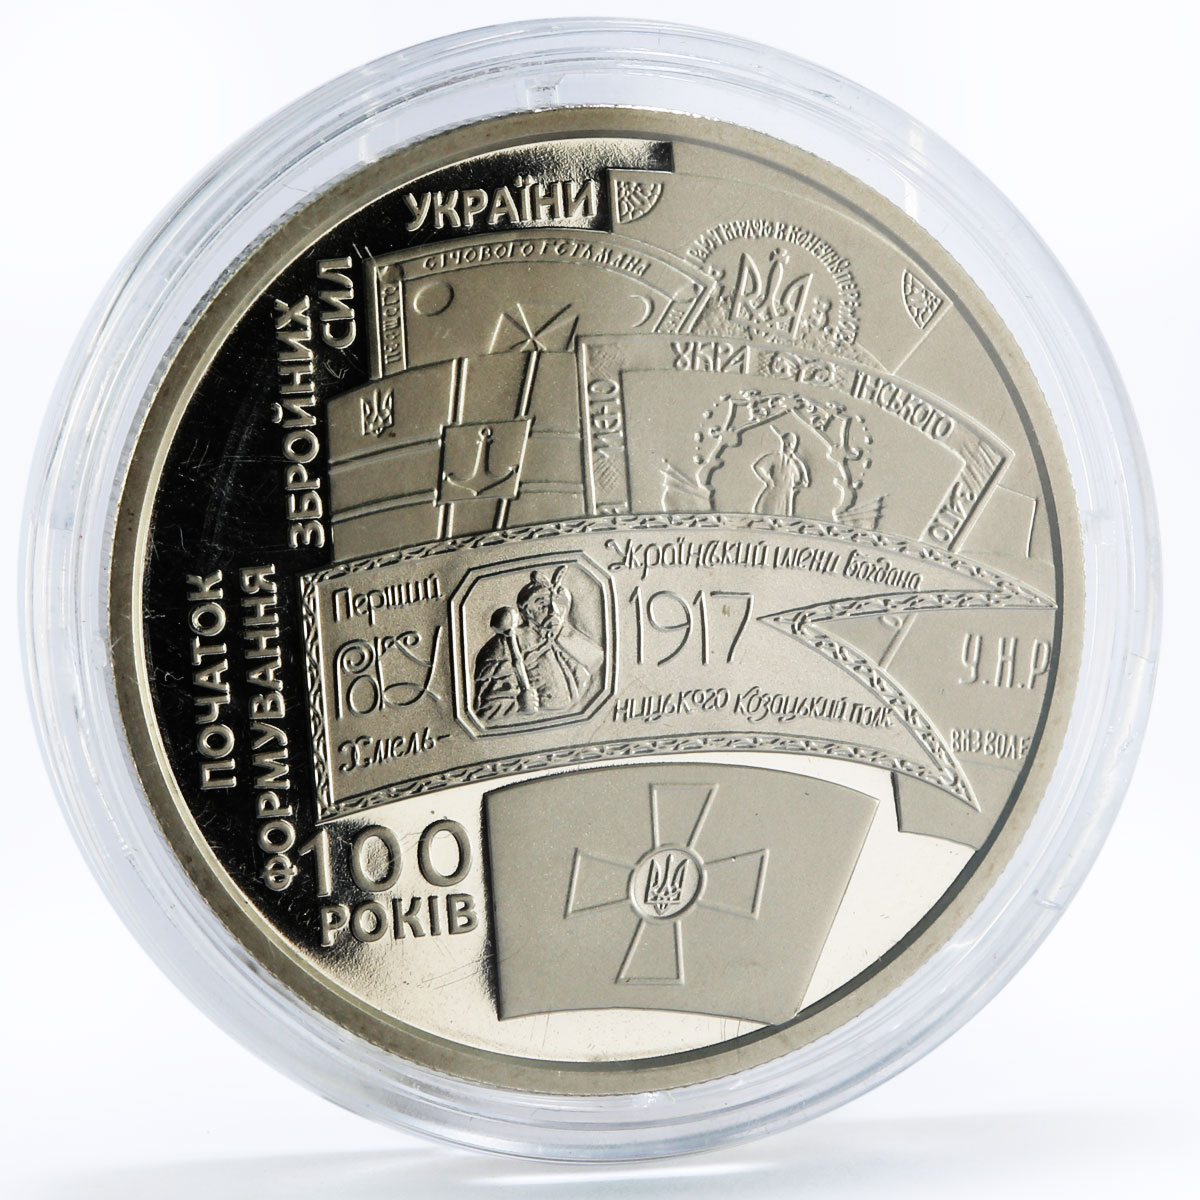 Ukraine 5 hryvnias 100th Anniversary of Khmelnitskyi Regiment nickel coin 2017